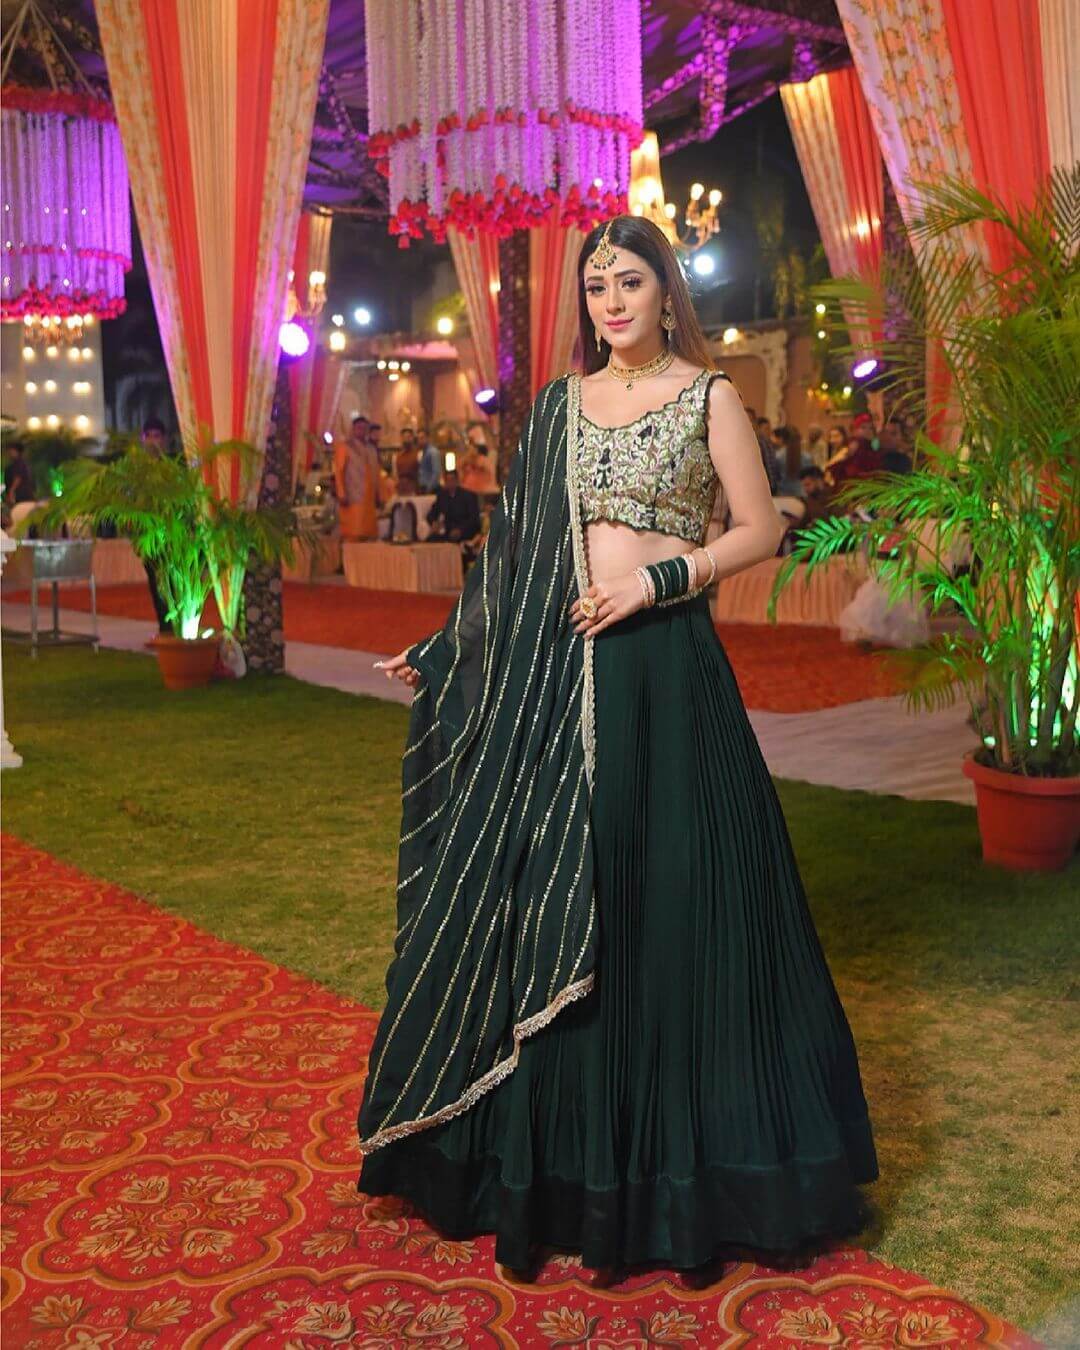 Hiba Nawab Gives Us Major Bridesmaid Goal In Bottle Green Lehenga Outfit